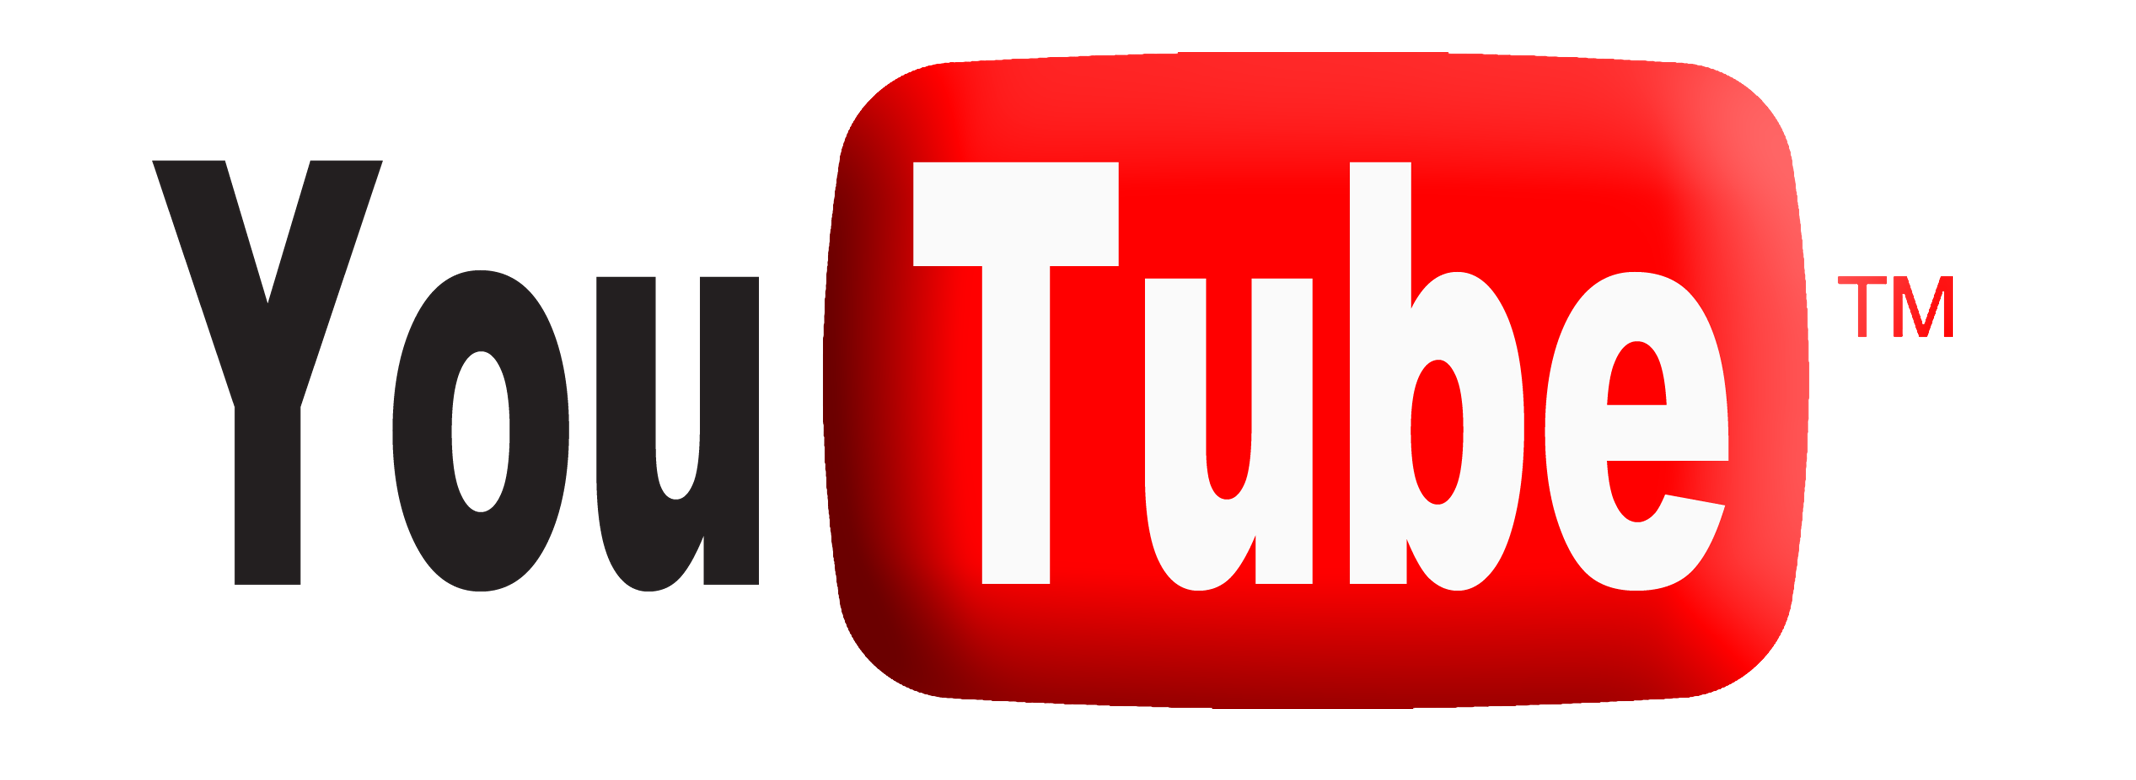 YouTube HD Logo by Marcosrsto